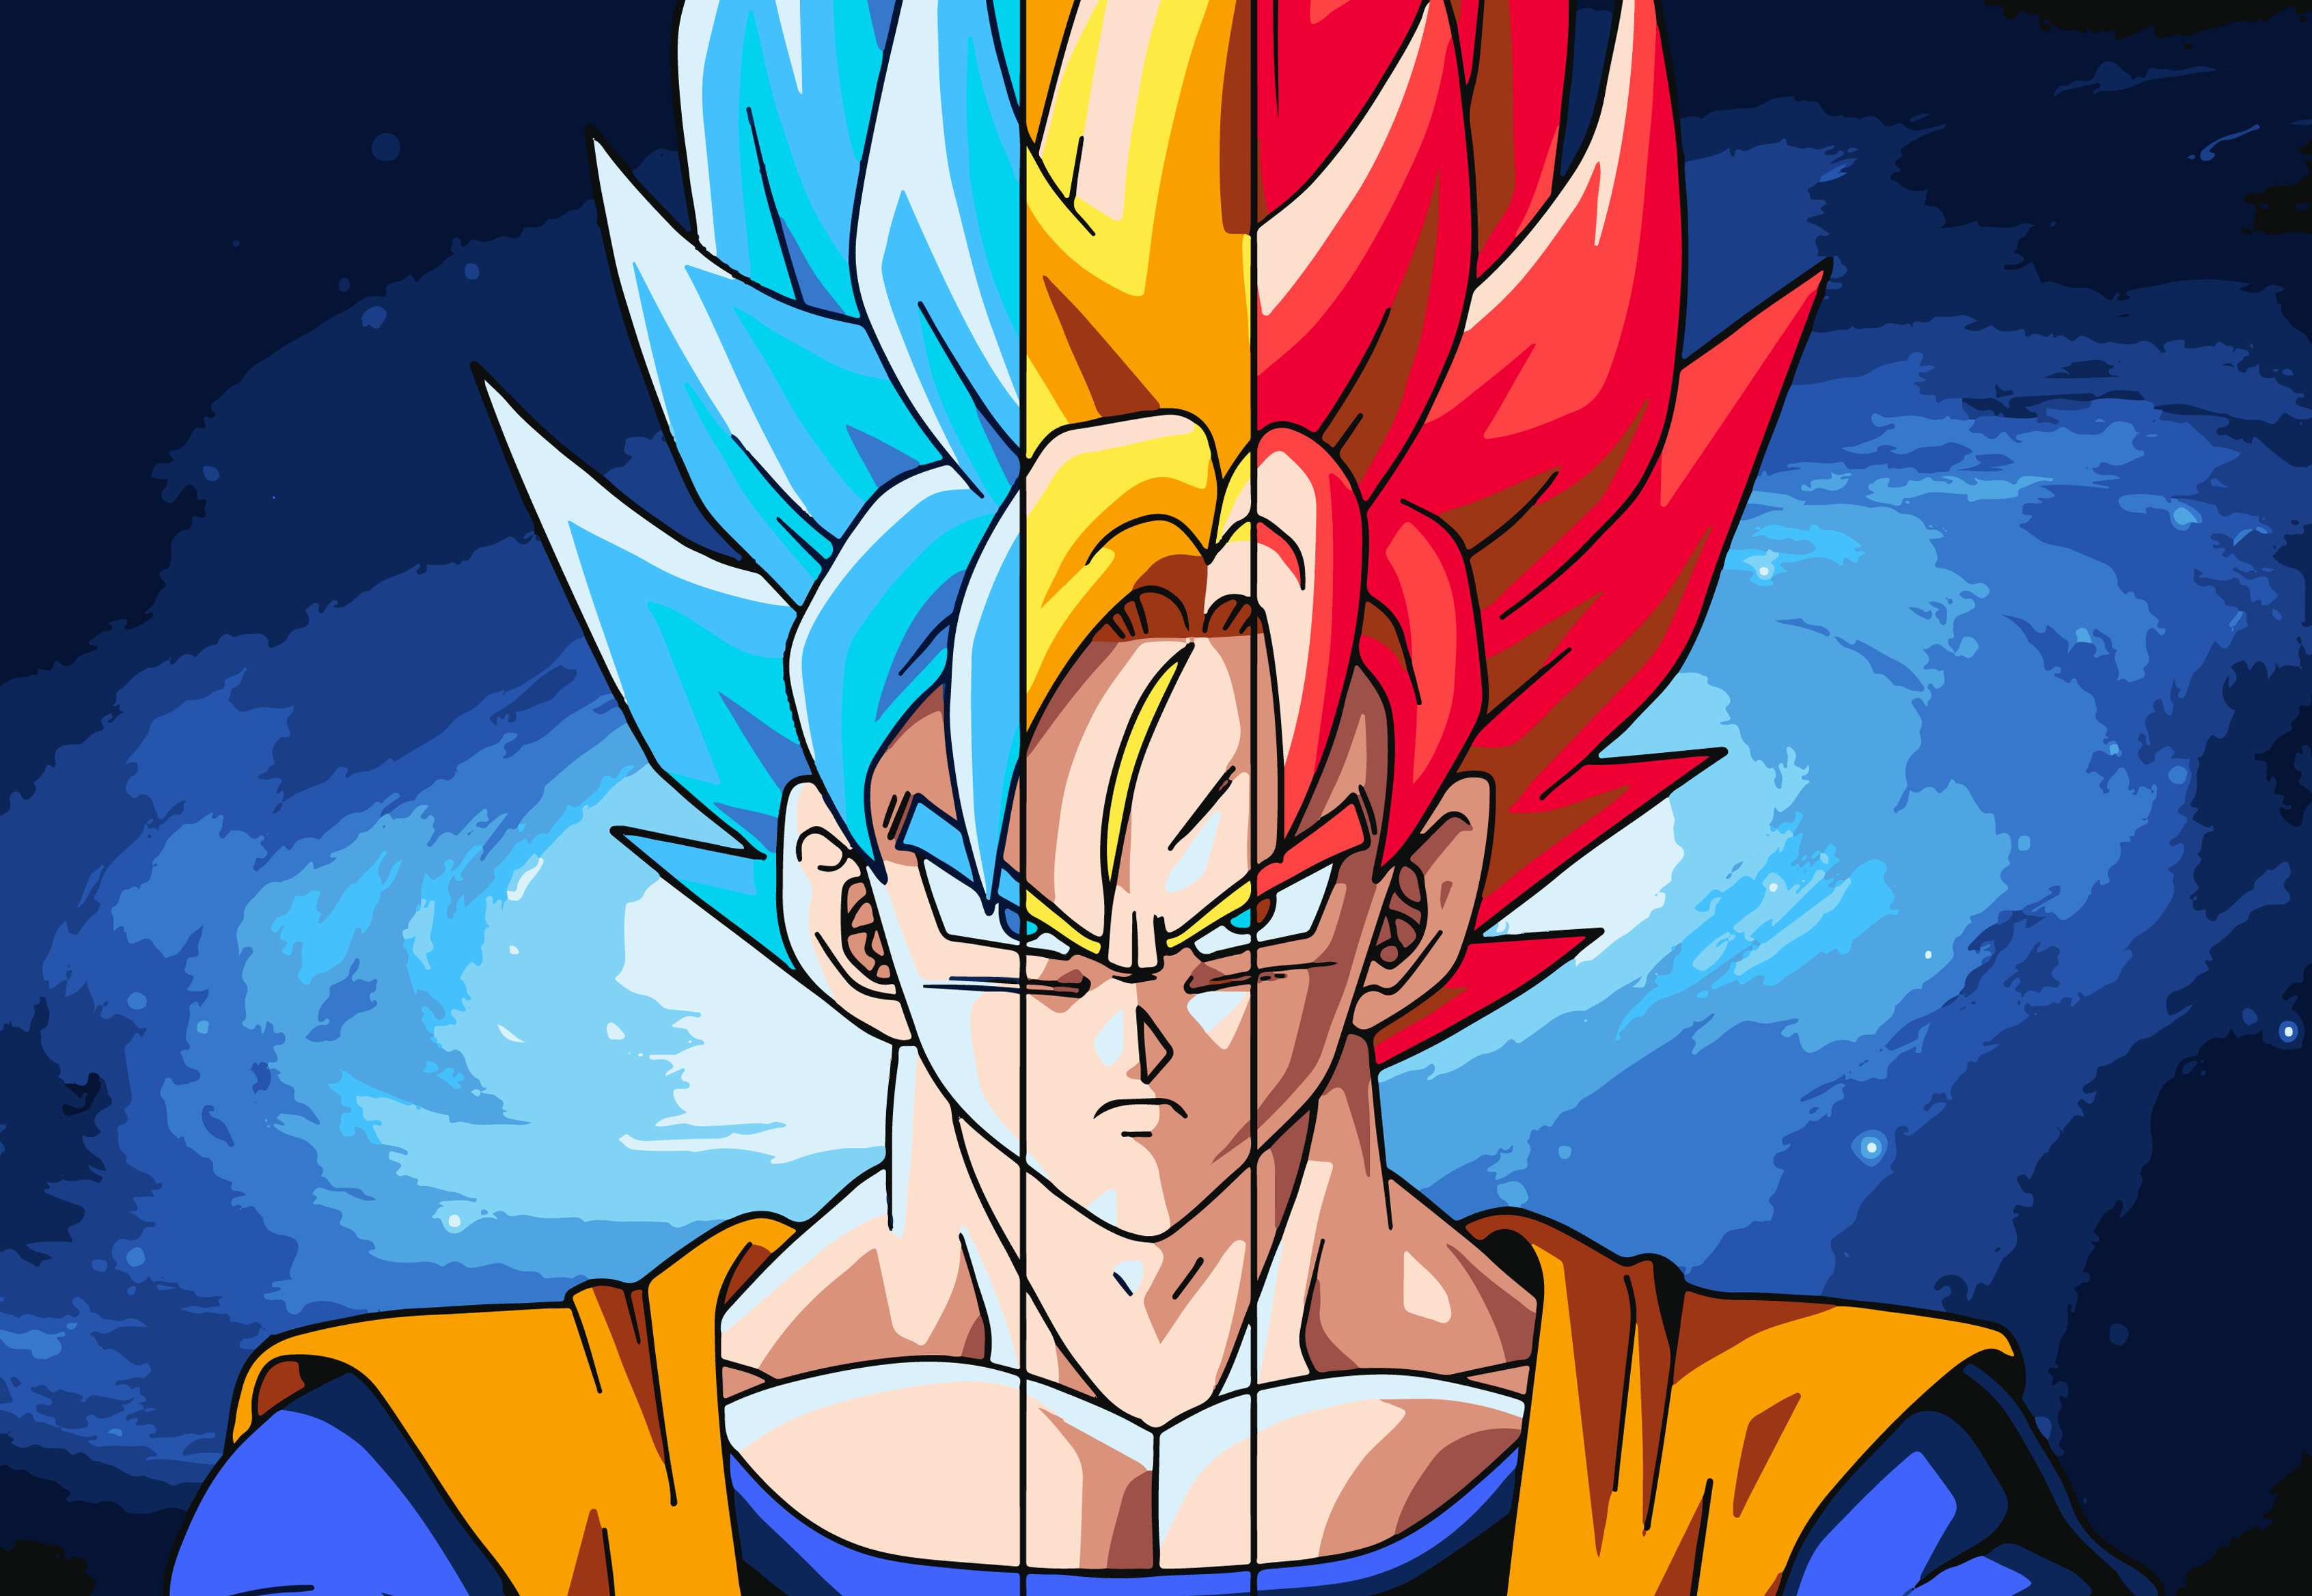 Goku the Super Saiyan Full HD Wallpapers and Backgrounds Image.